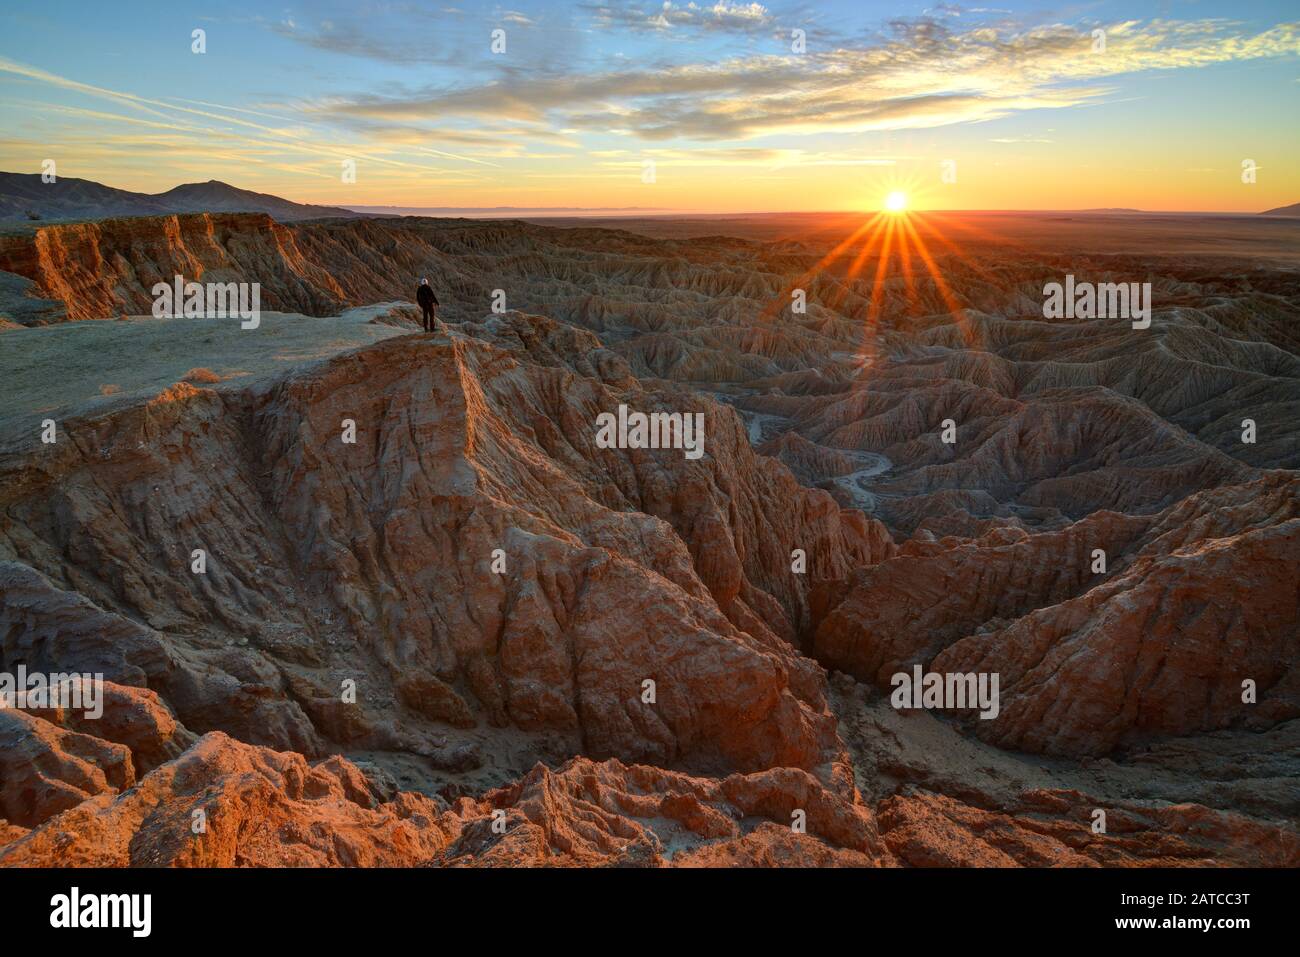 Man watching Sunrise Over the Badlands, Anza Borrego Desert State Park, California, USA Stock Photo